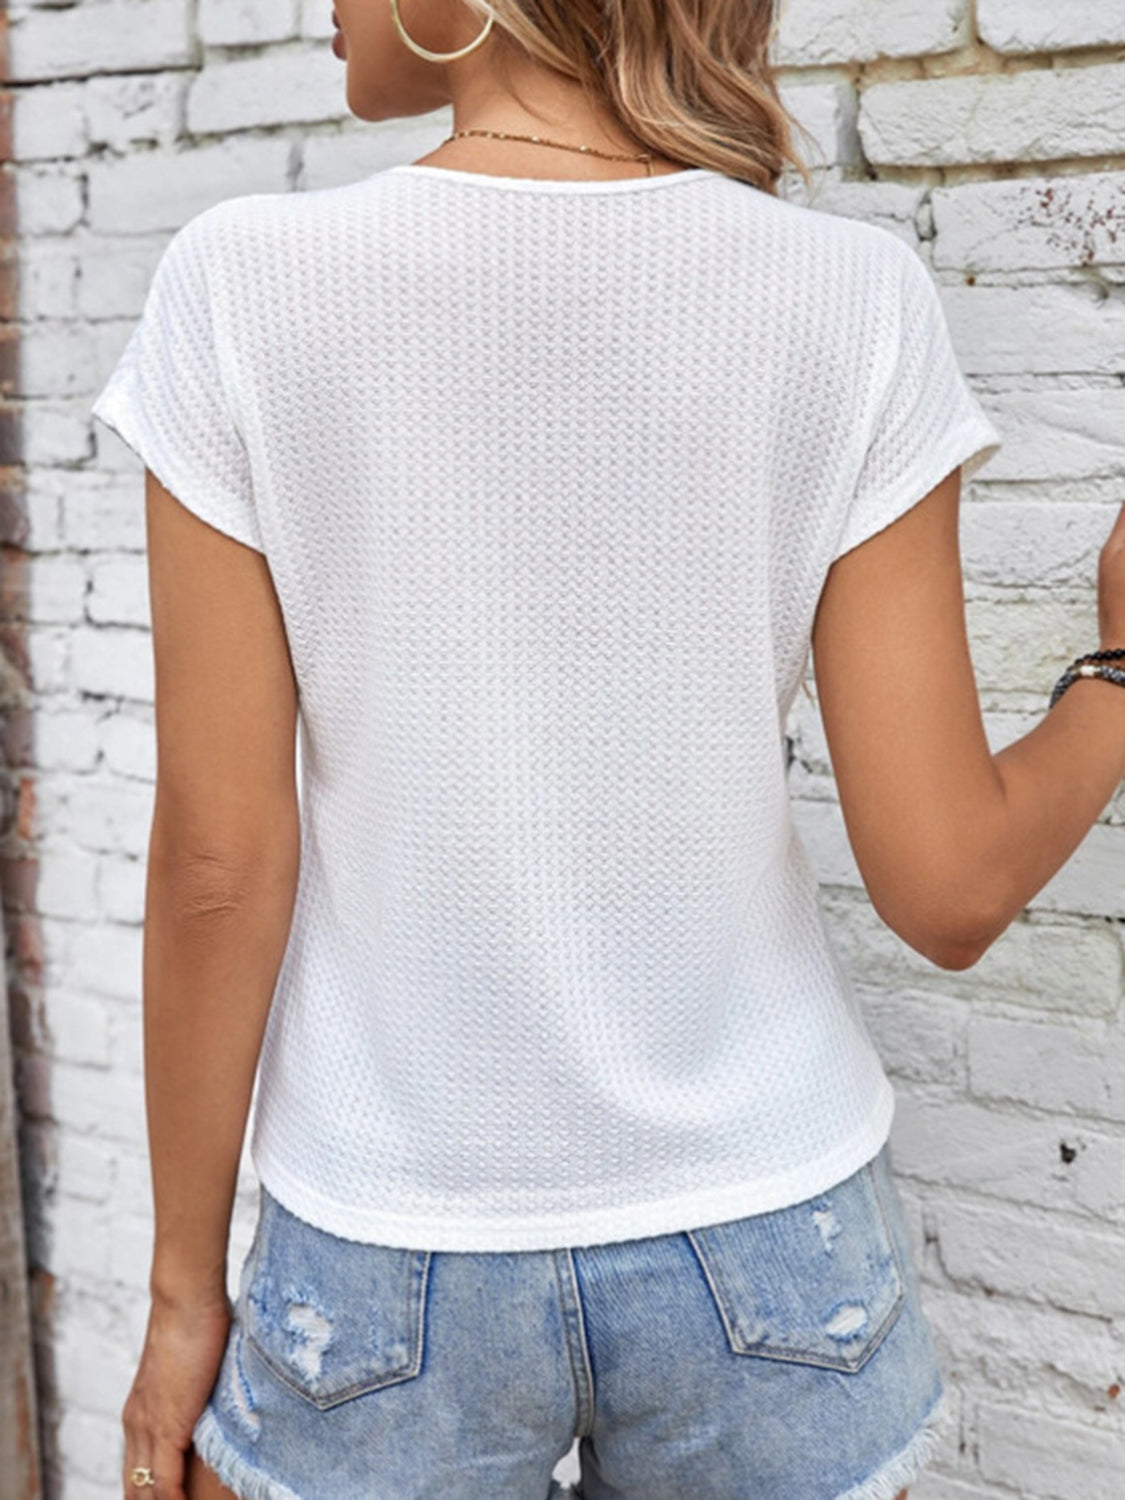 TEEK - White V-Neck Cap Sleeve Blouse TOPS TEEK Trend   